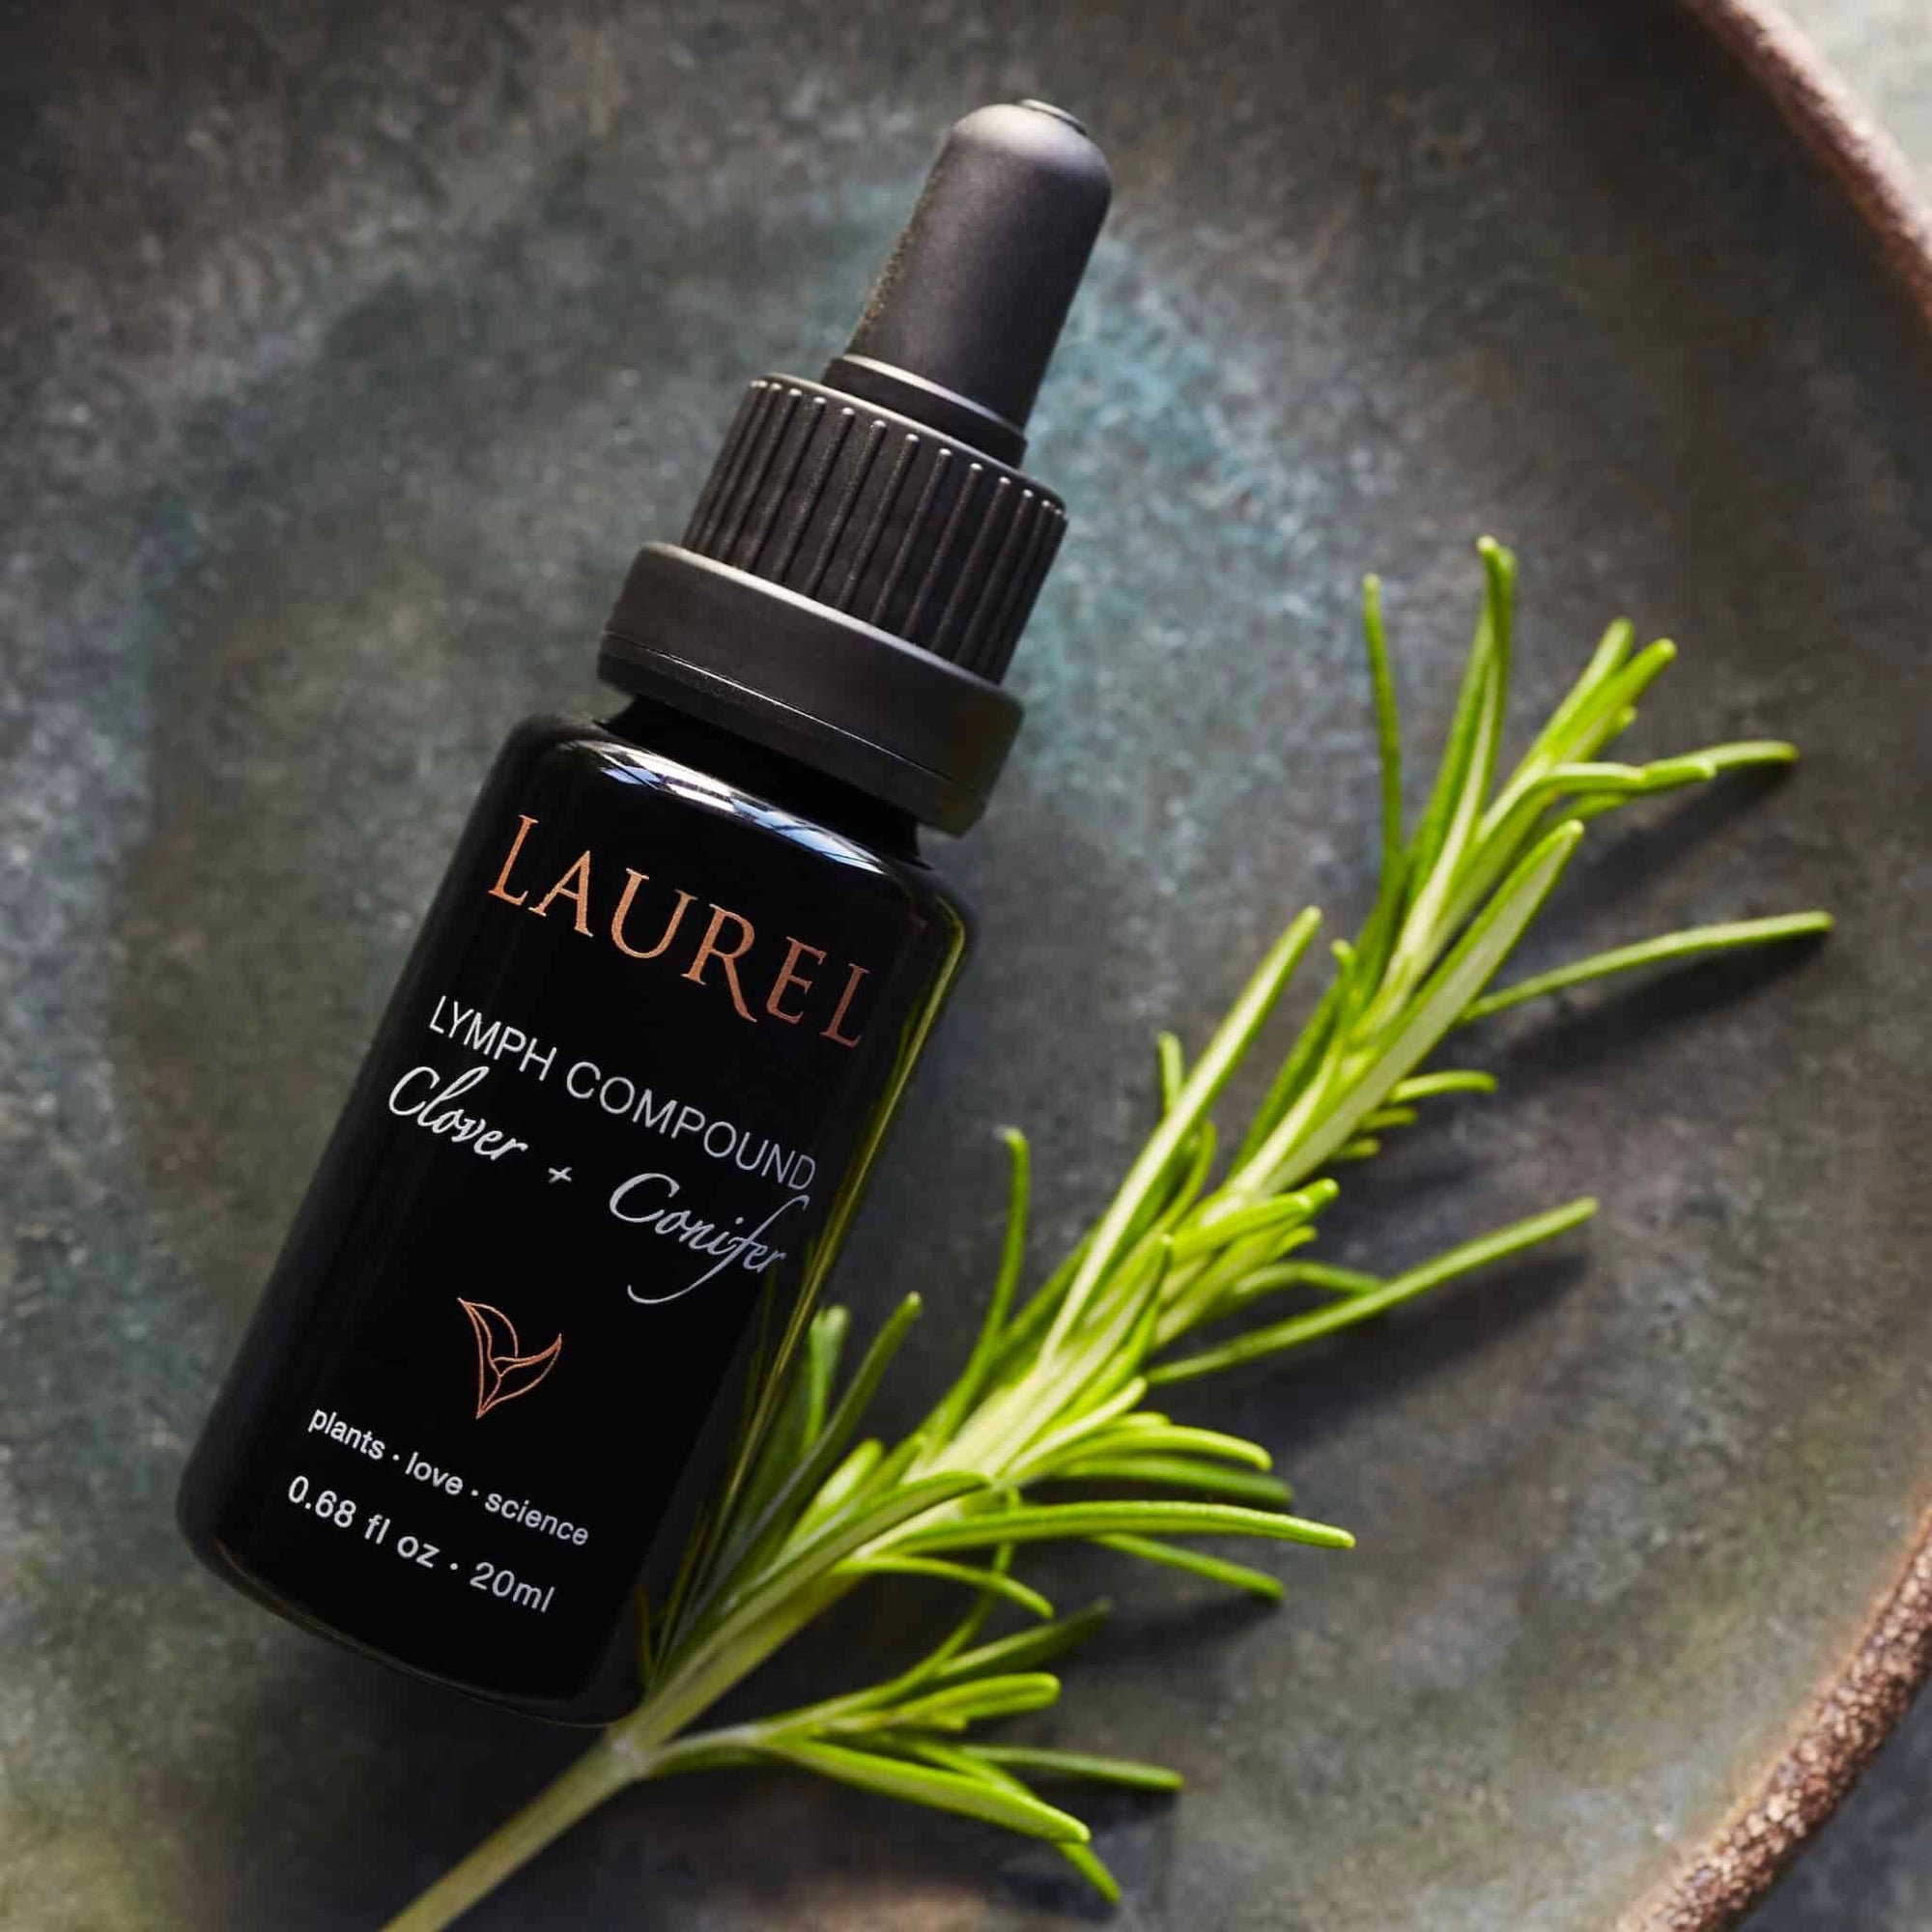 Laurel Skin - Laurel Lymph Compound Clover + Conifer - ORESTA clean beauty simplified